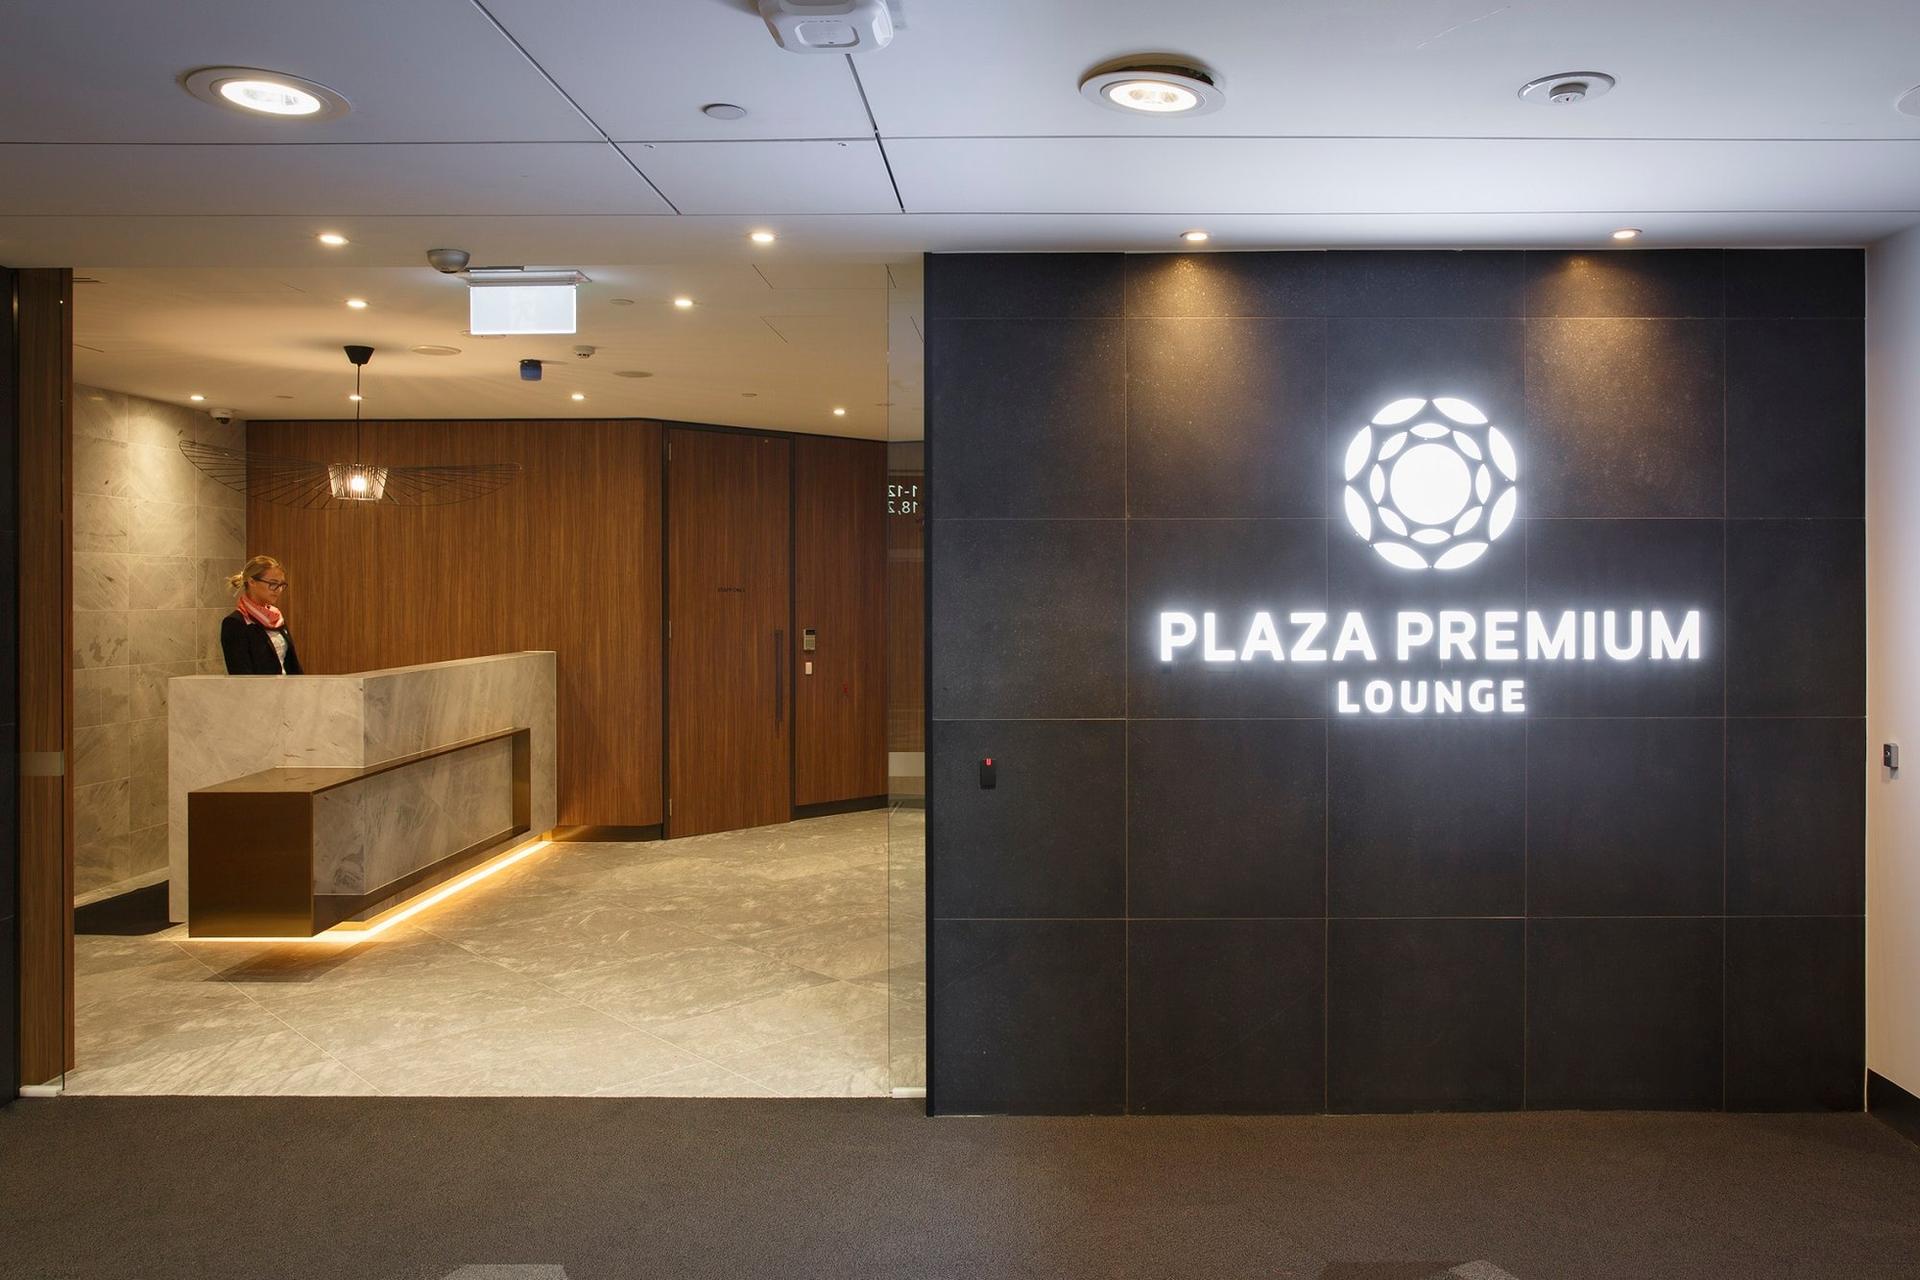 Plaza Premium Lounge image 20 of 33